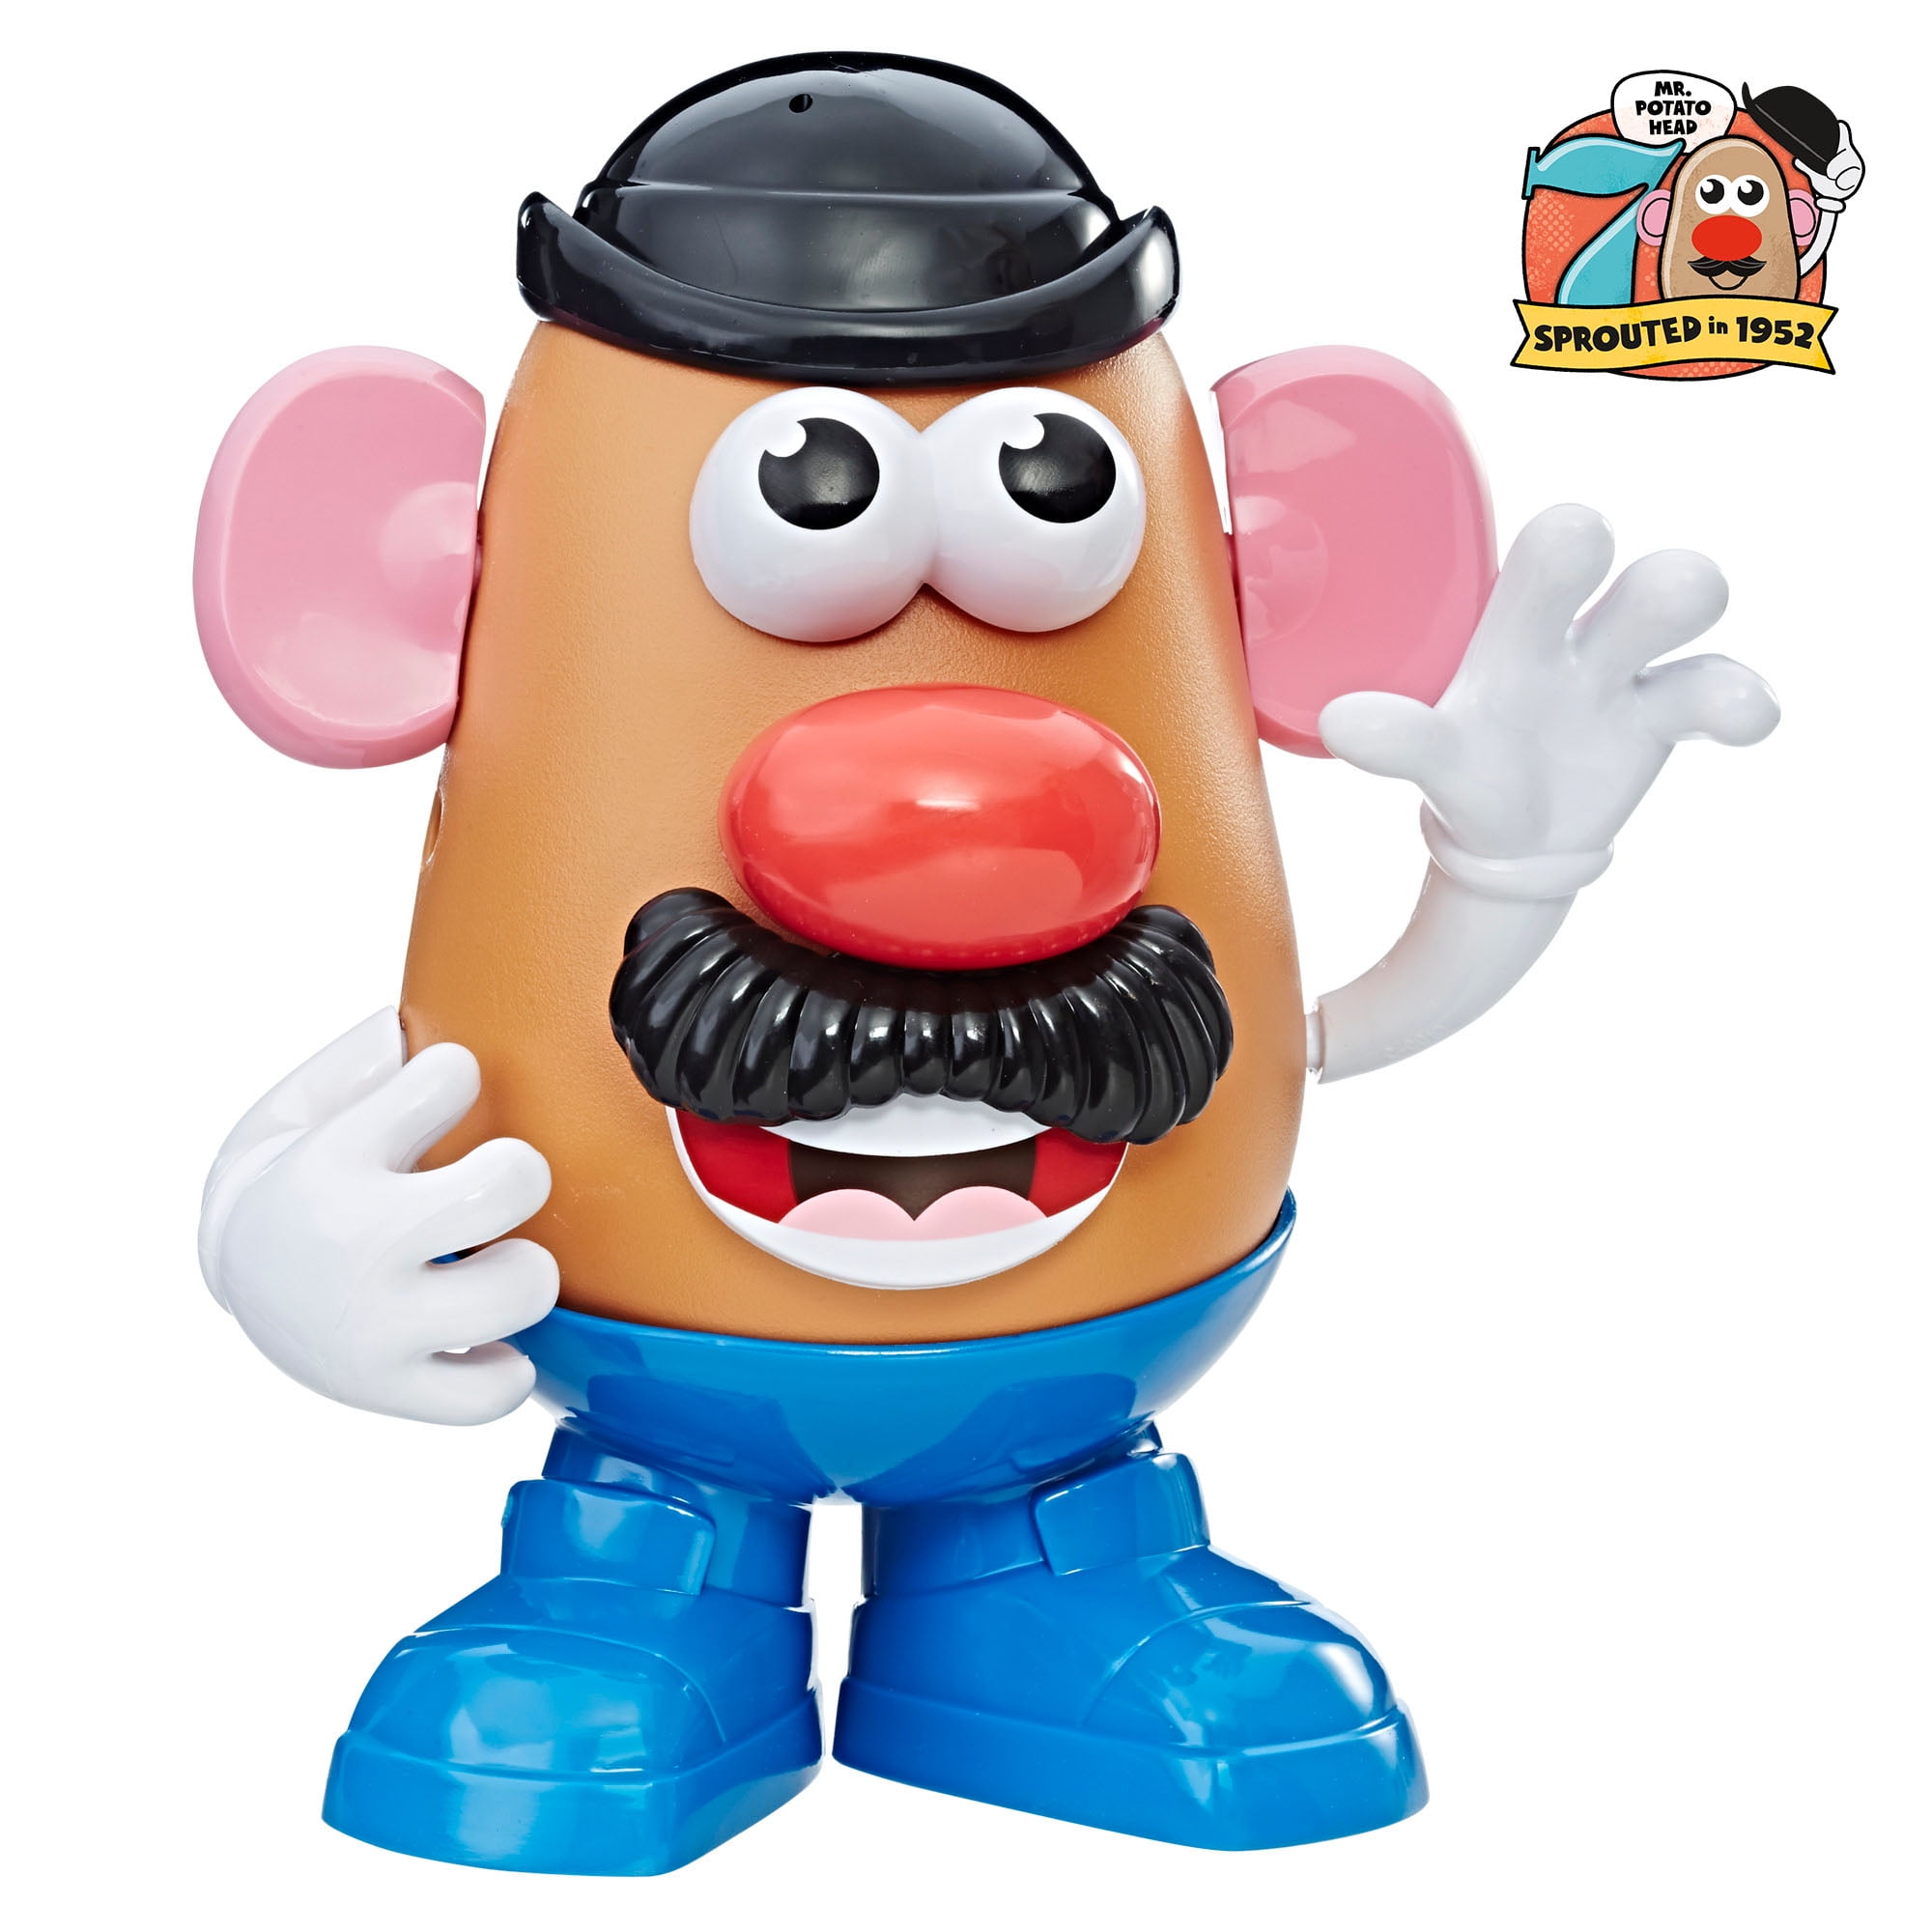 Potato Head Party Spud Figure A0910 Playskool Mr for sale online 